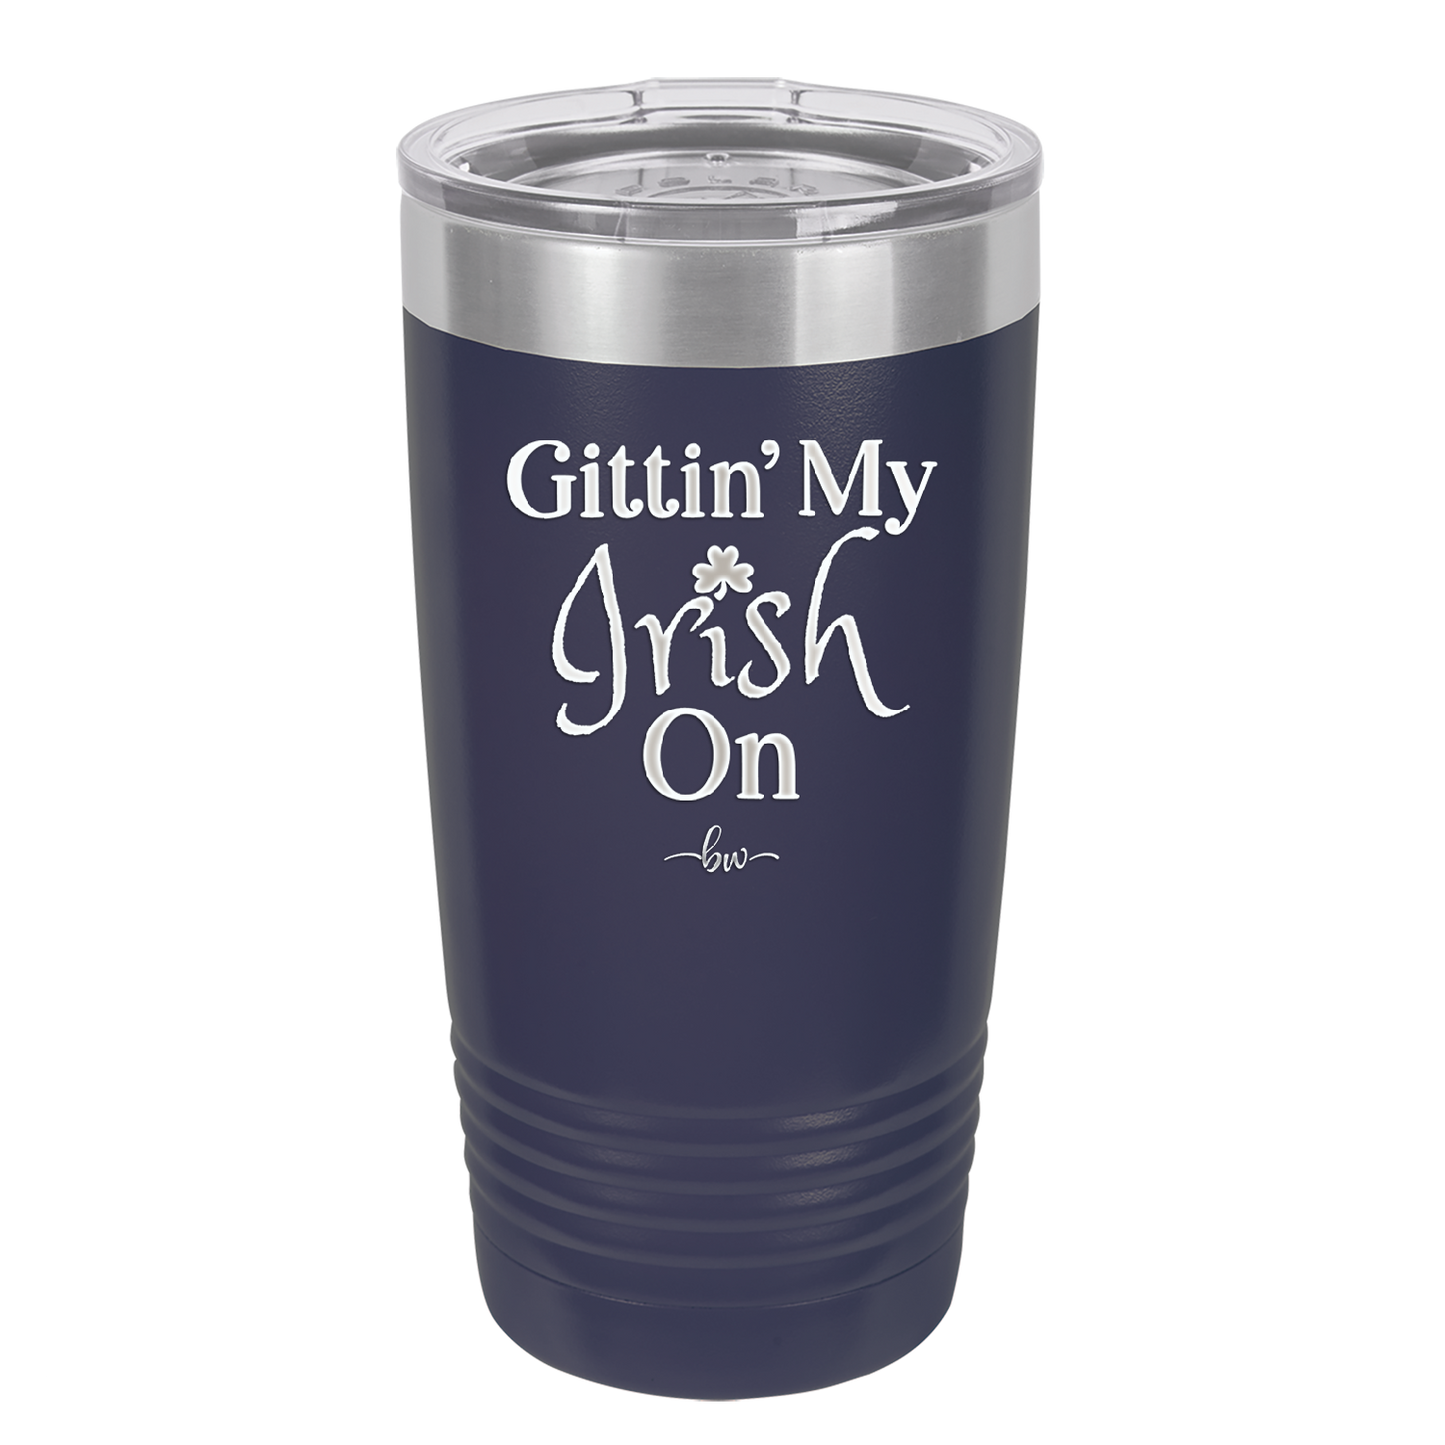 Gittin' My Irish On - Laser Engraved Stainless Steel Drinkware - 1798 -